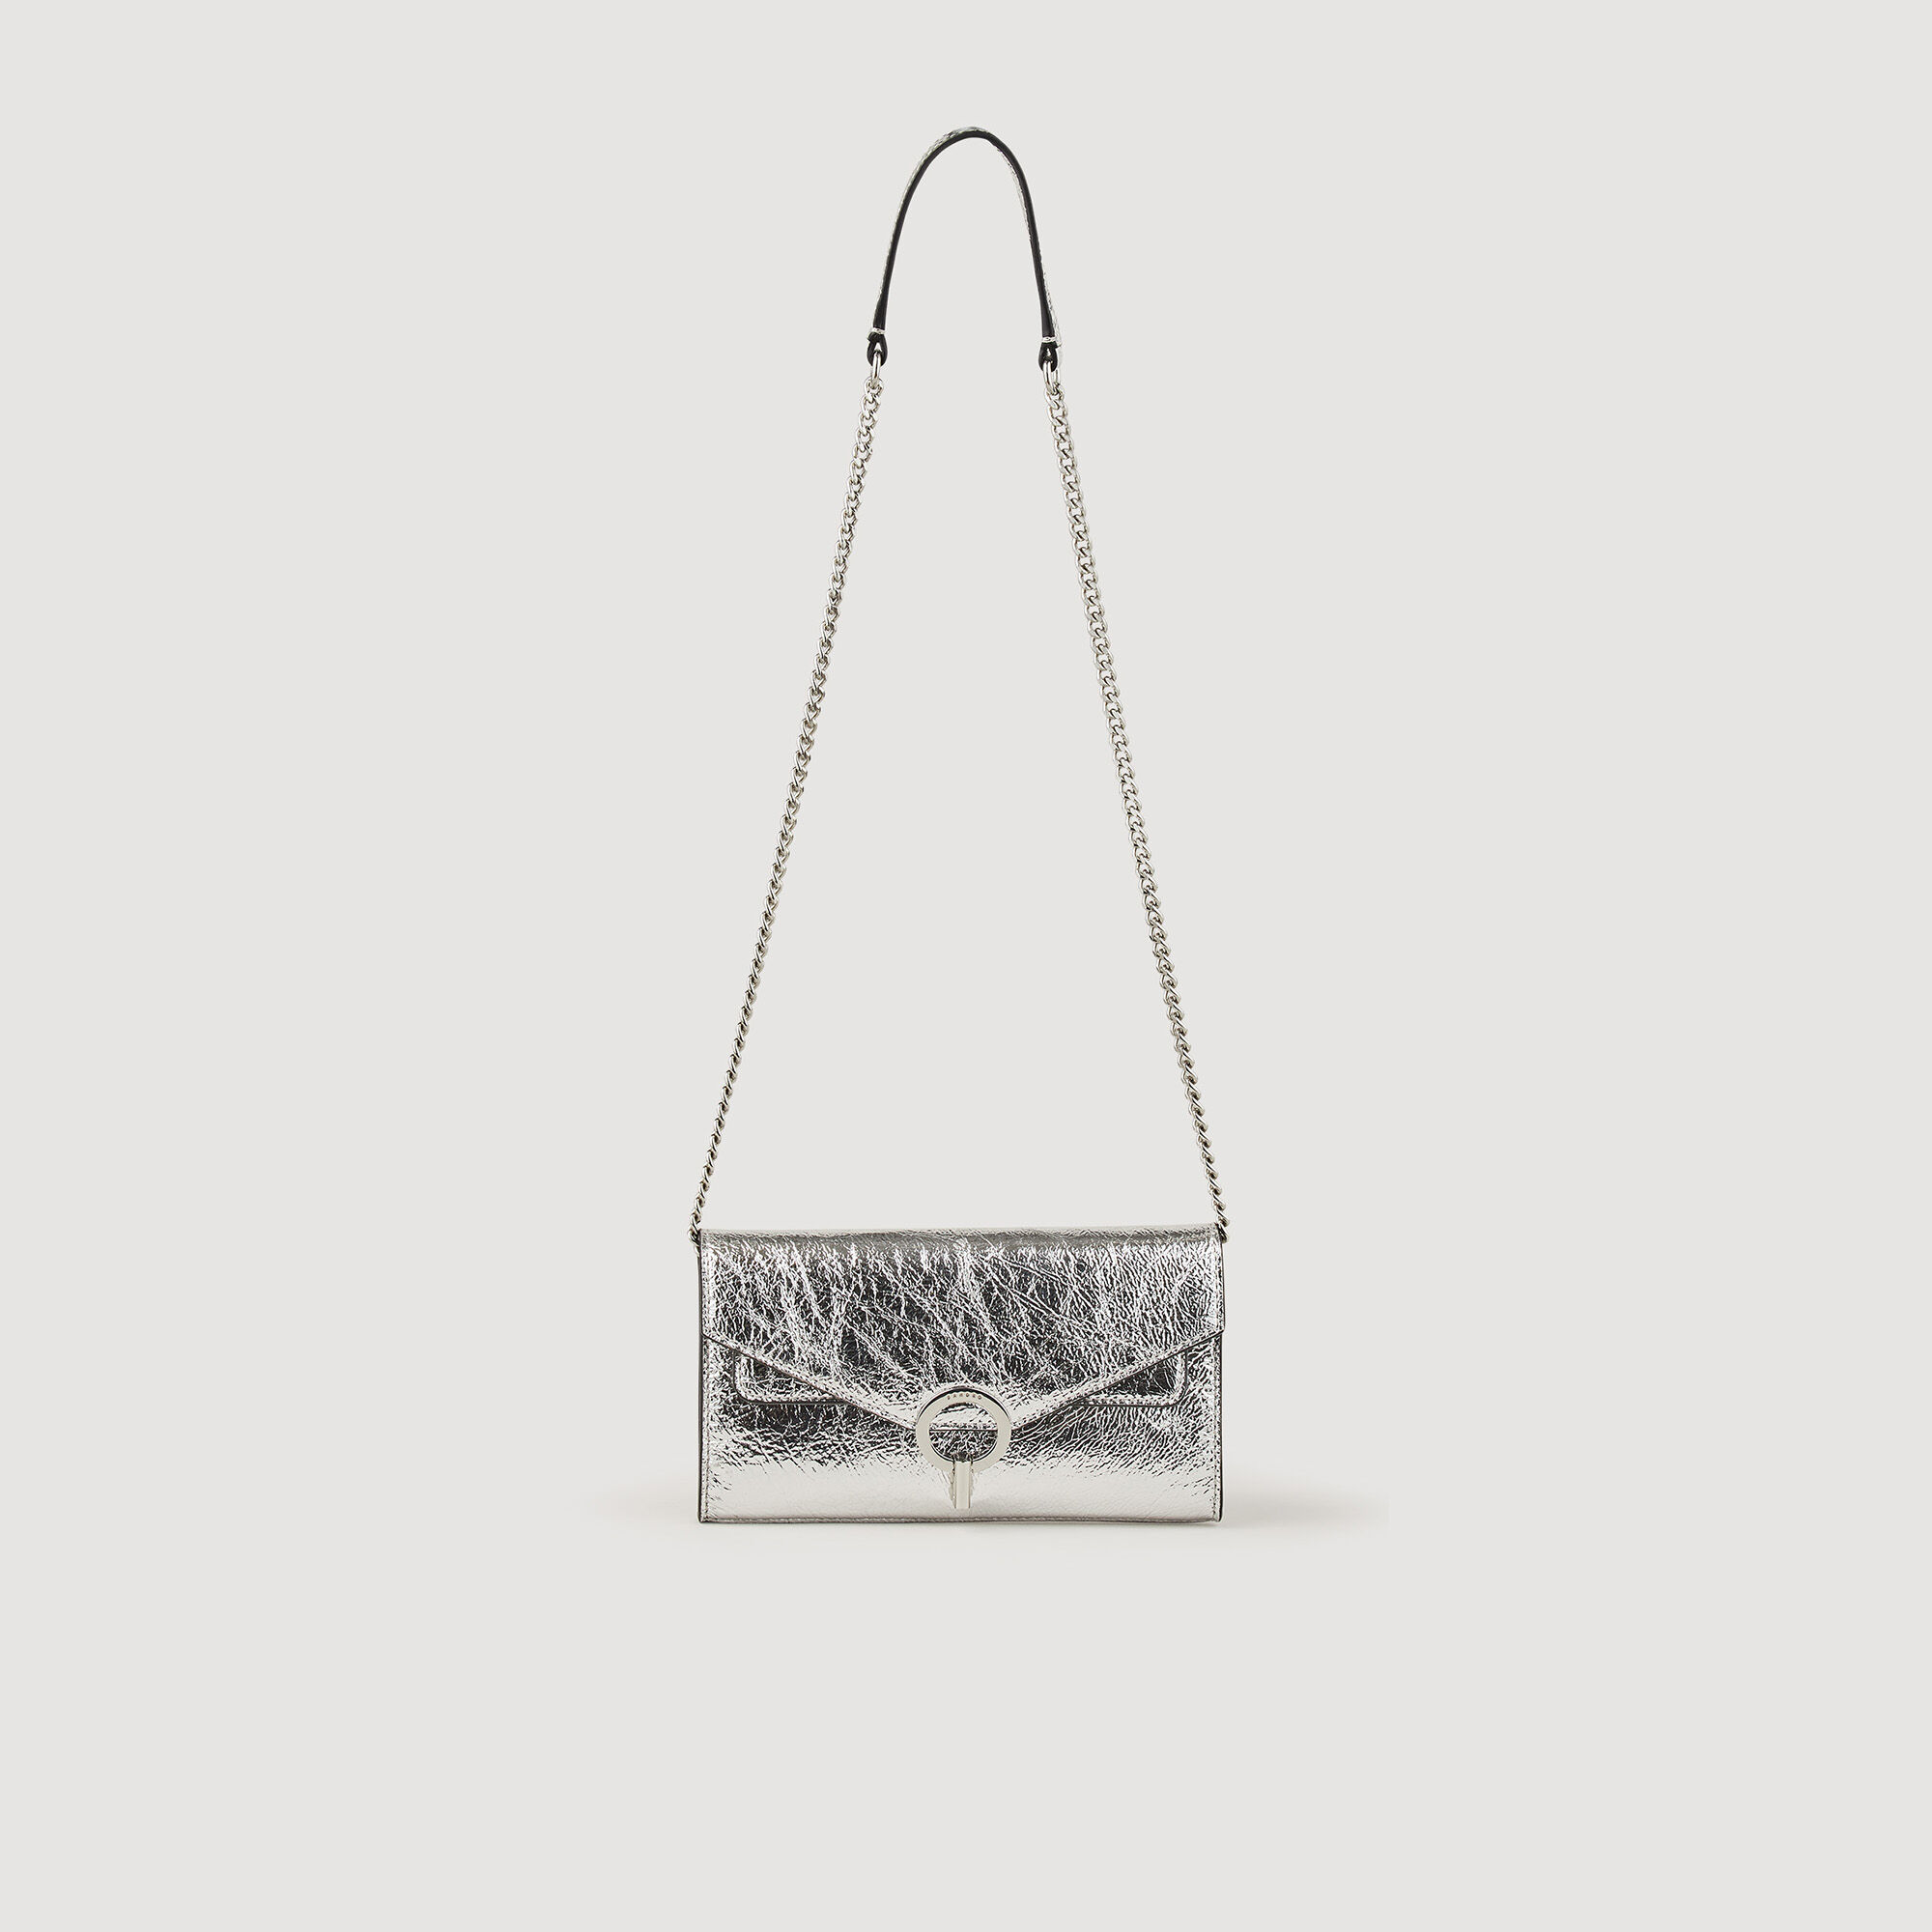 Metallic Silver Waida Wrist Strap Clutch Bag With Cross Body Handbag Chain  By Peter Kaiser At Walk In Style